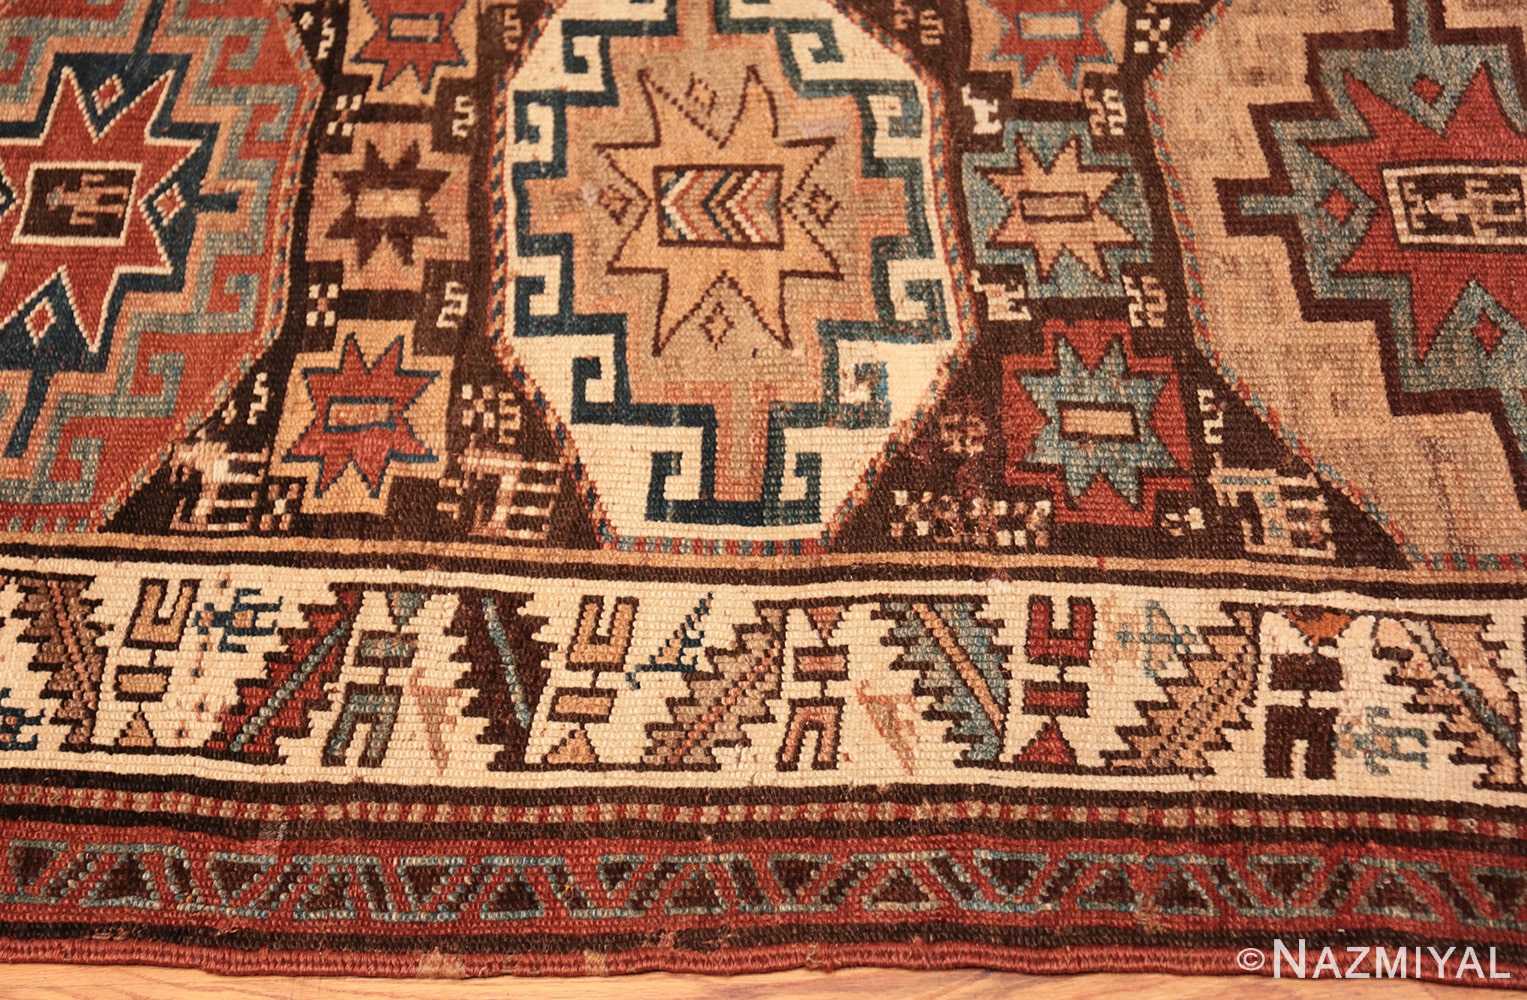 Border Tribal Antique Persian Kurdish runner rug 50463 by Nazmiyal